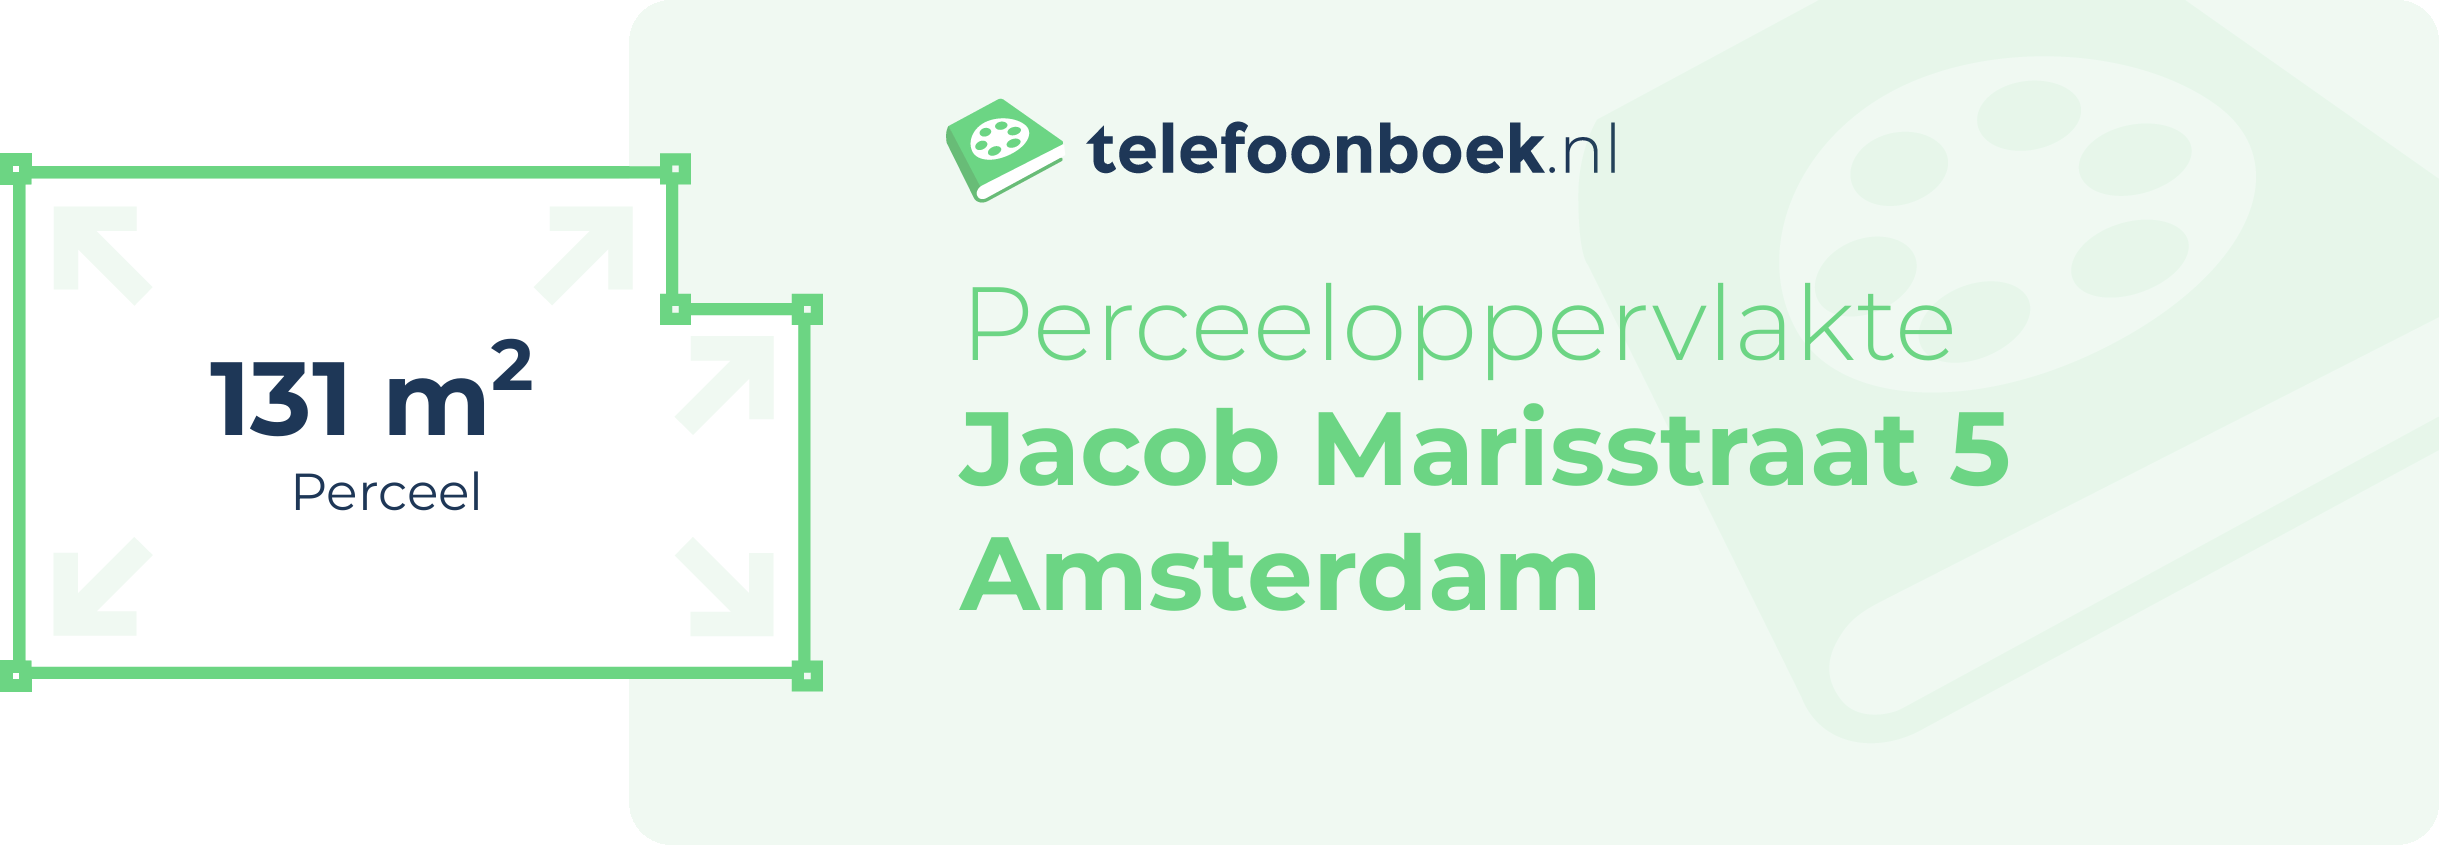 Perceeloppervlakte Jacob Marisstraat 5 Amsterdam